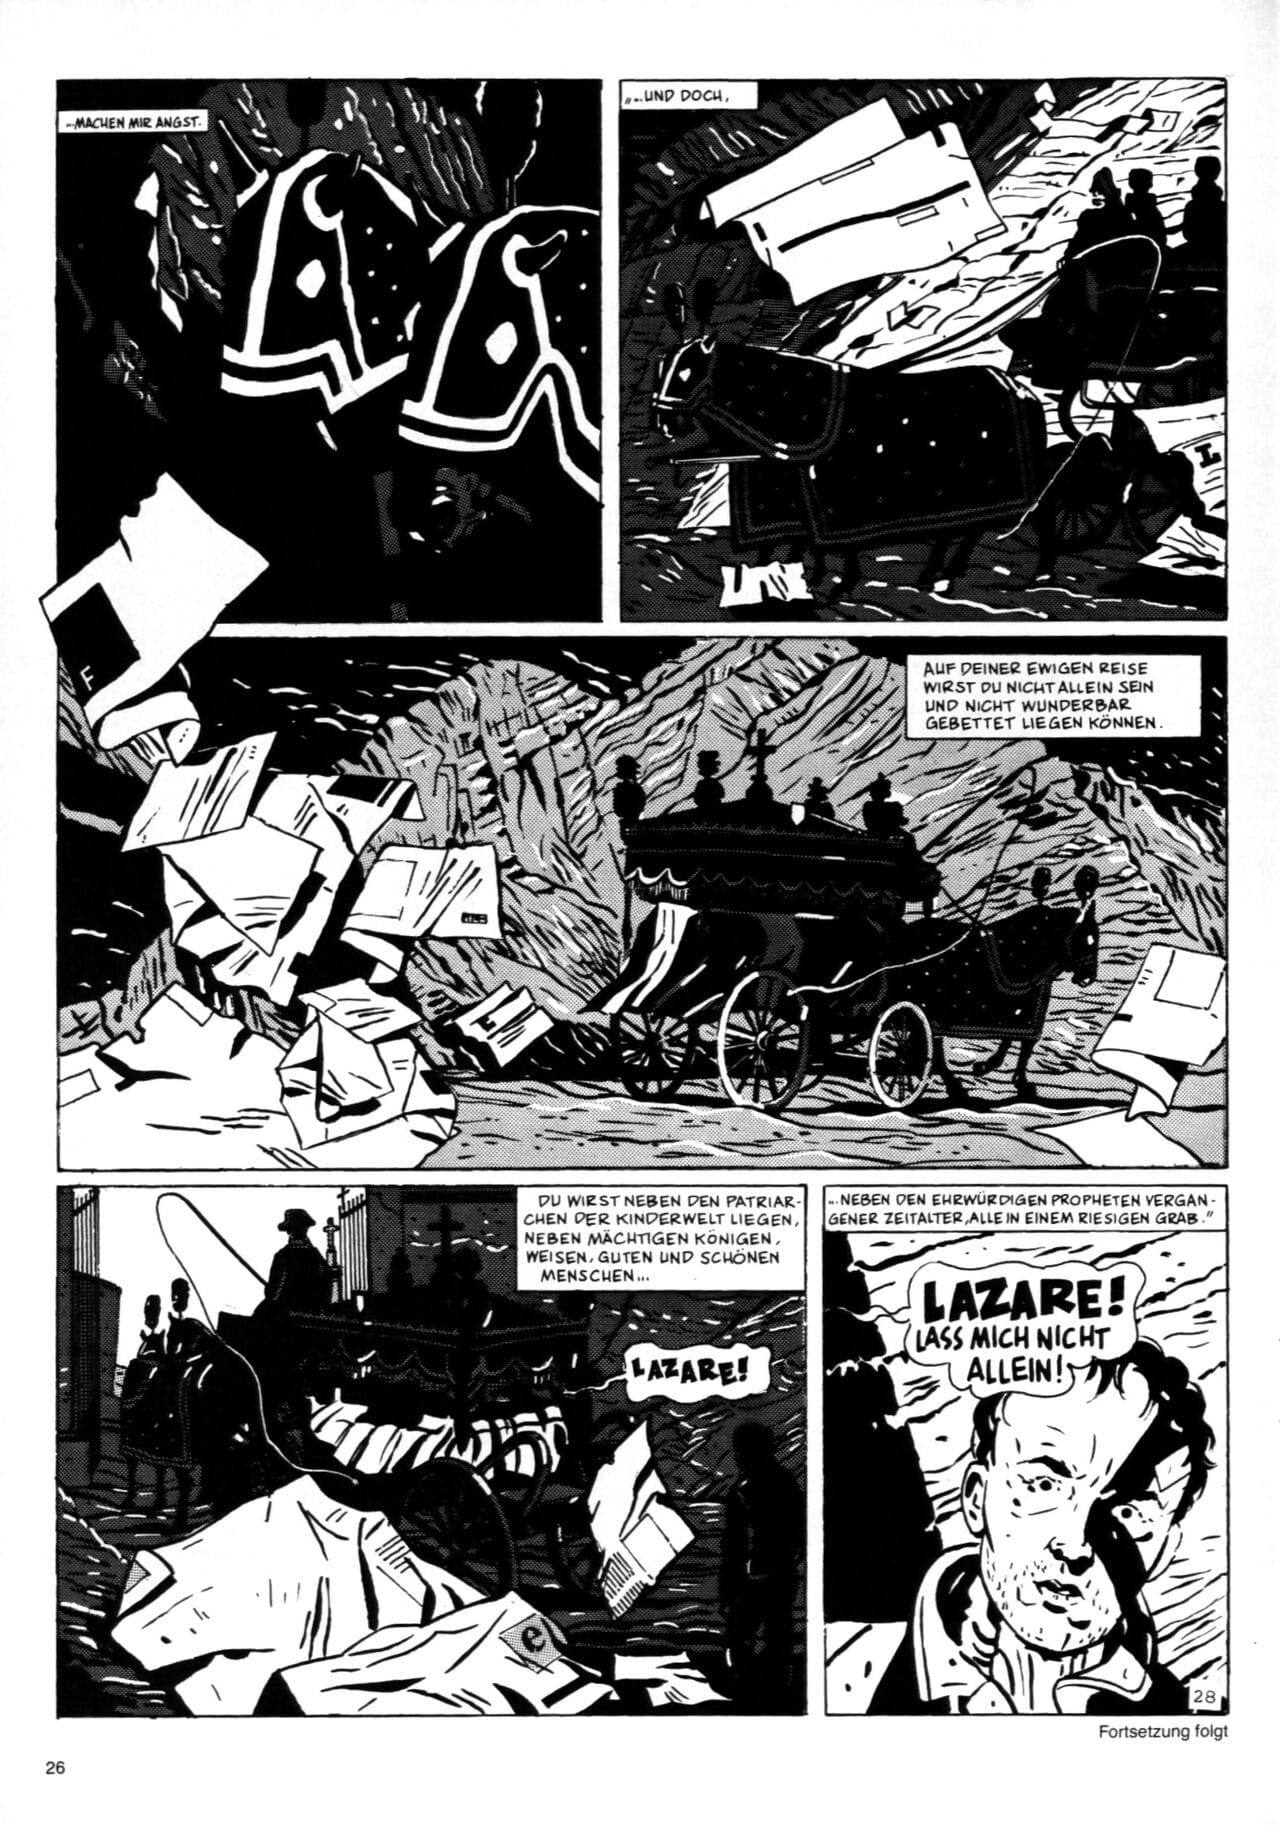 schwermetall #095 часть 2 page 1